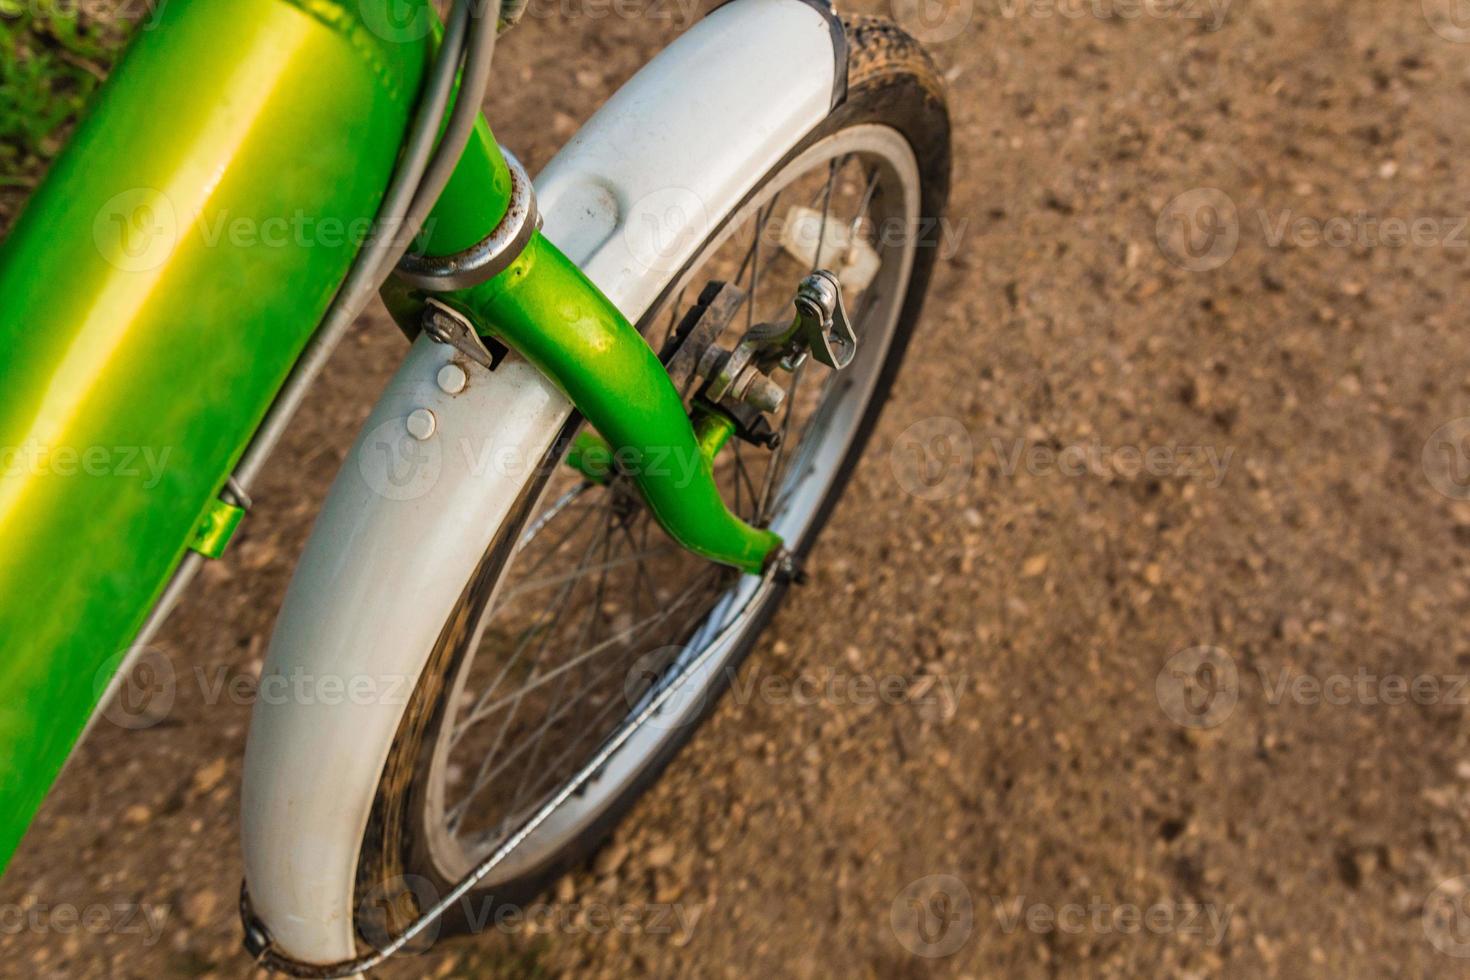 cykeltur genom lerig grusväg foto